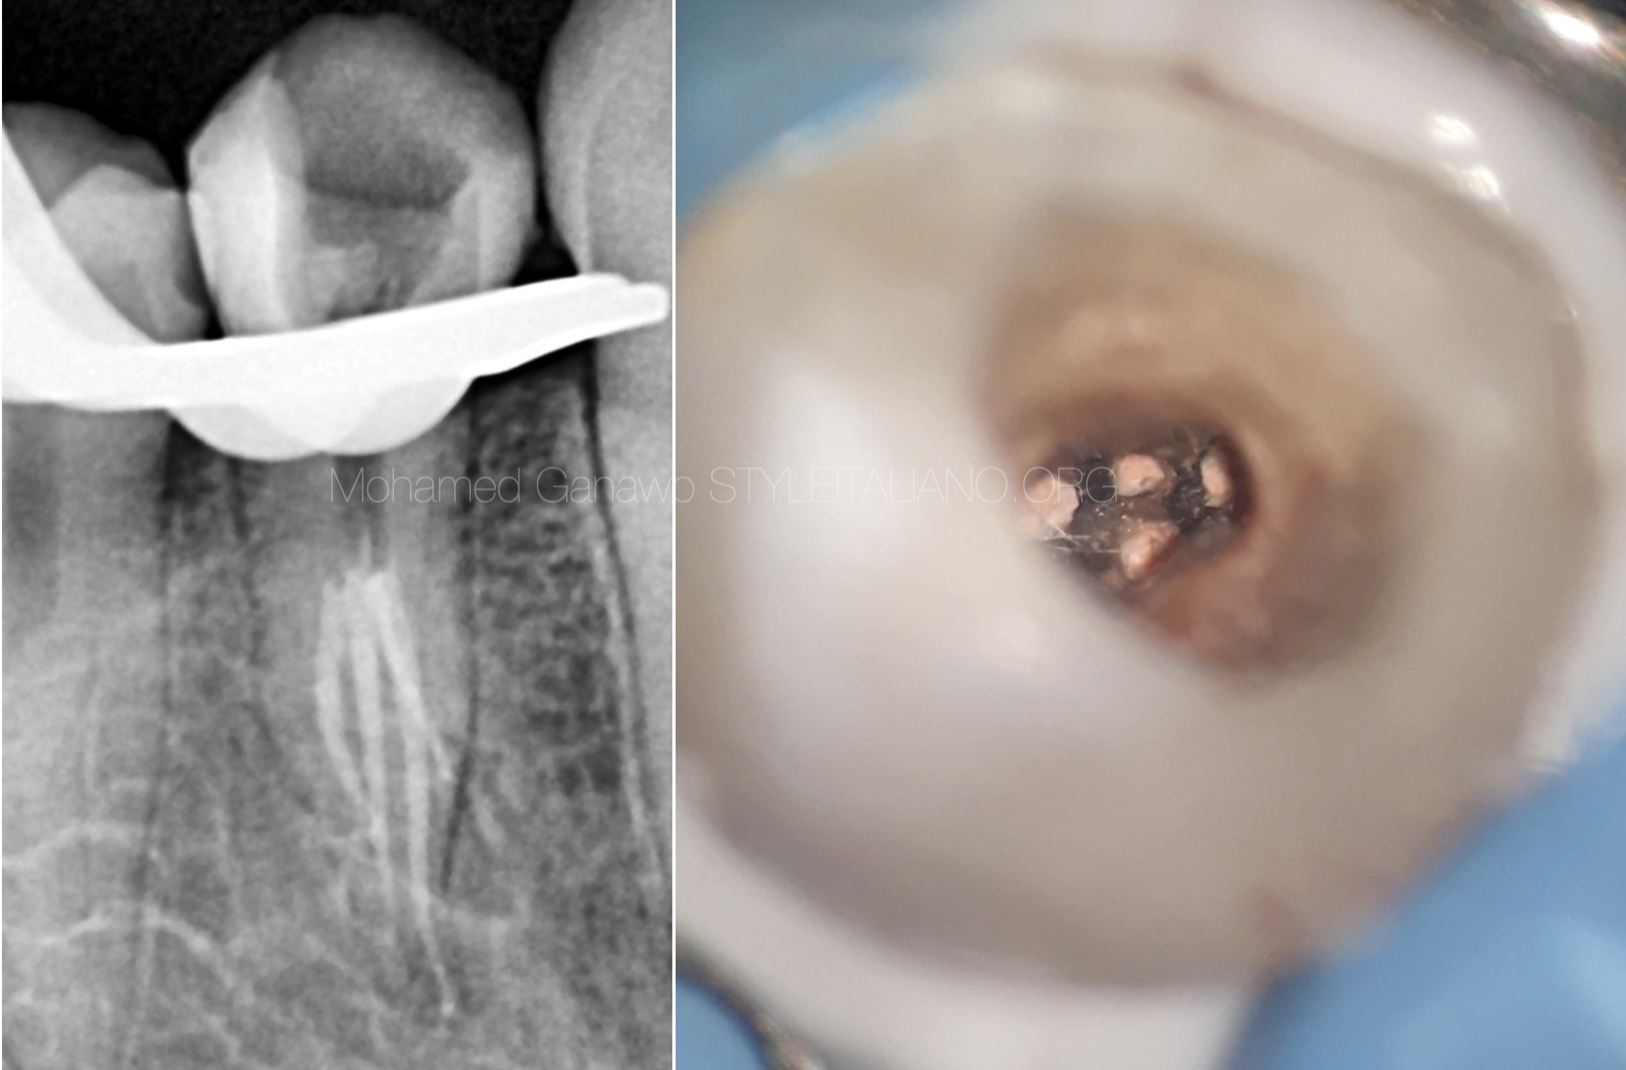 Management of a mandibular first premolar with four canals